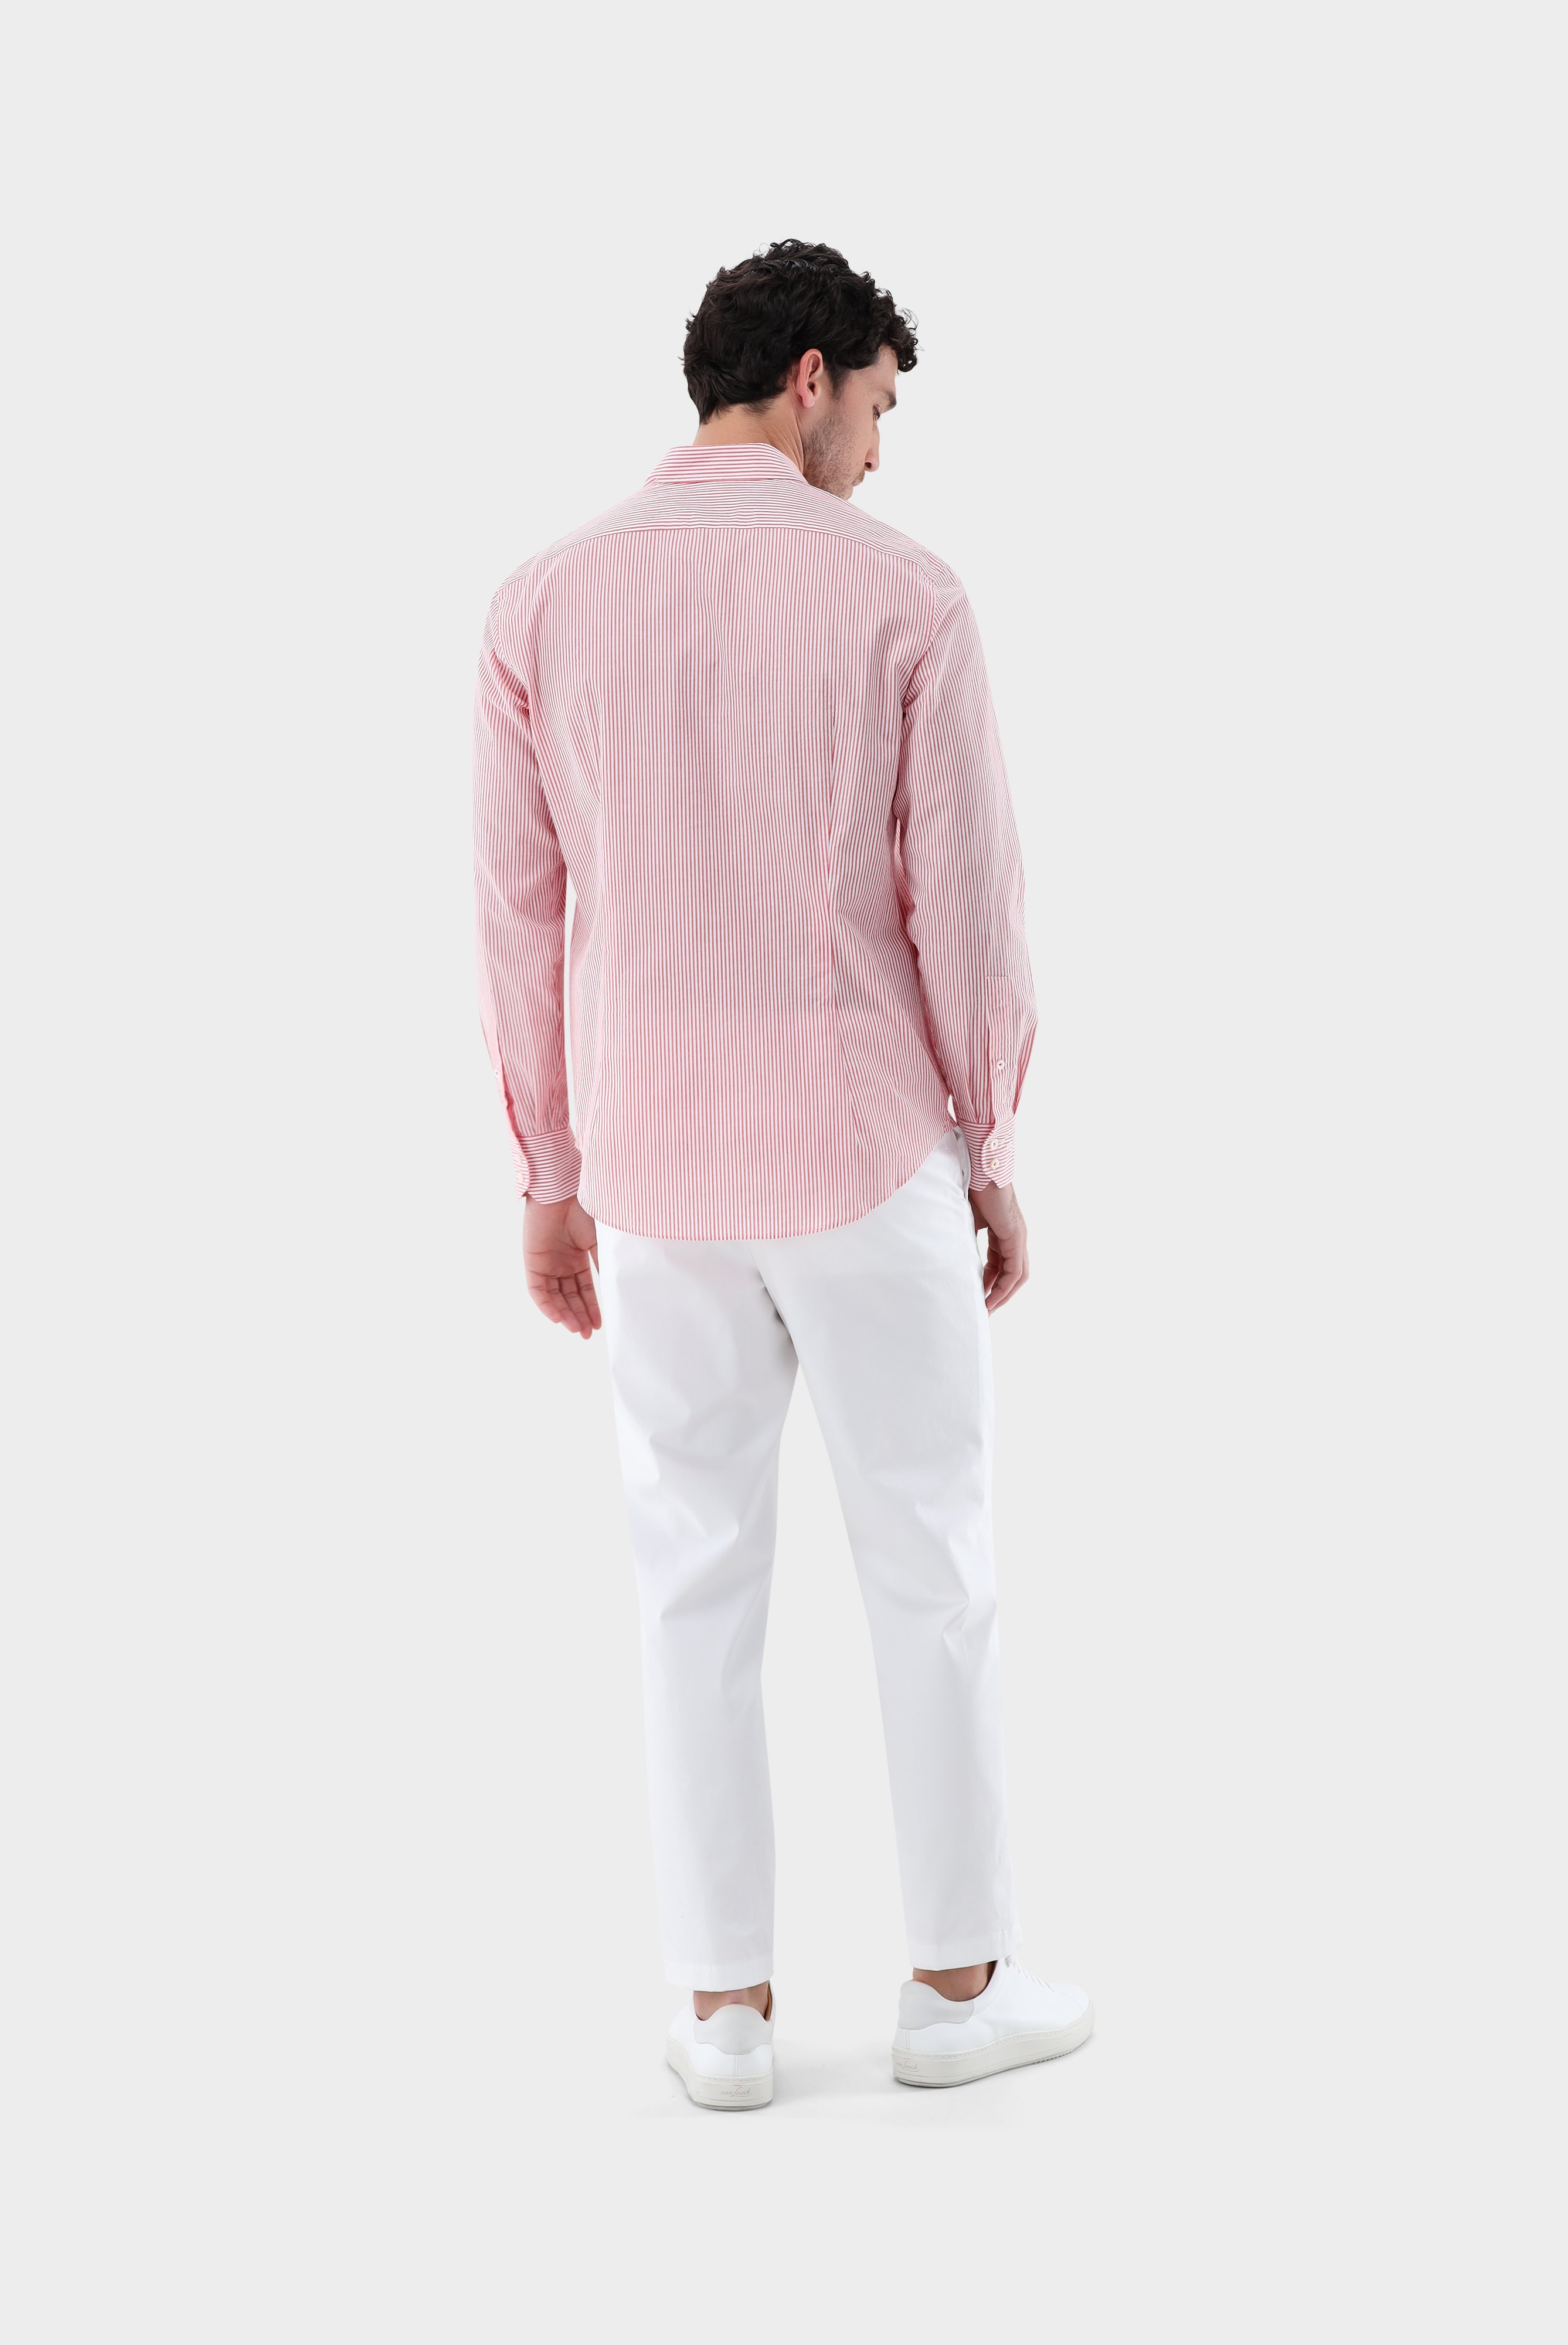 Casual Shirts+Striped Cotton Seersucker Shirt Tailor Fit+20.2011.AV.151054.550.40